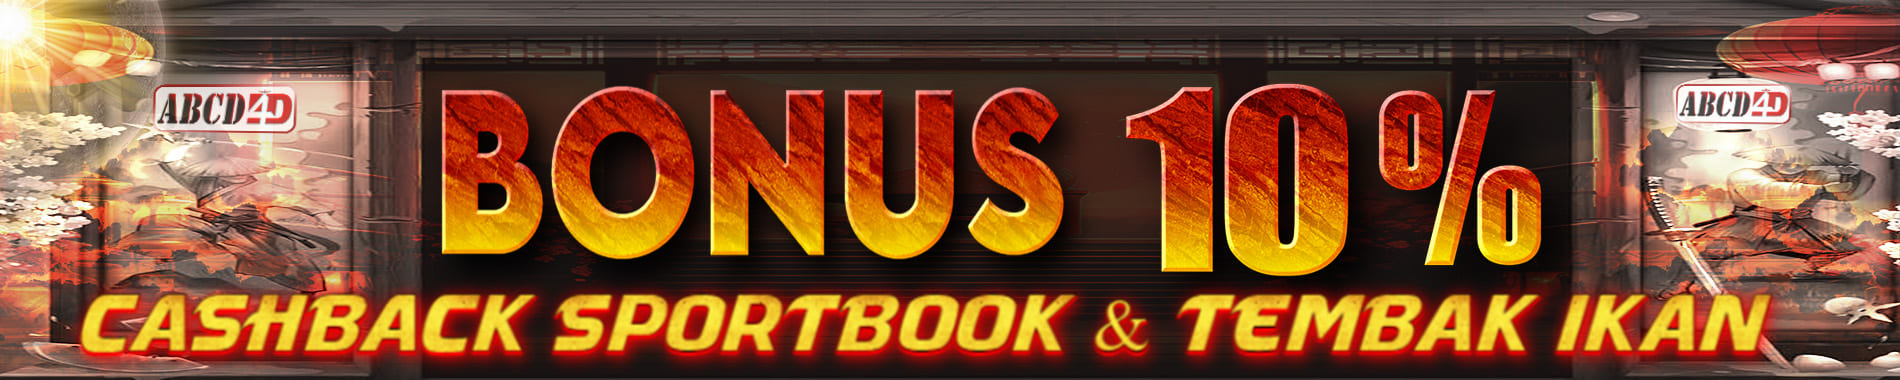 Bonus Cashback Sportbook